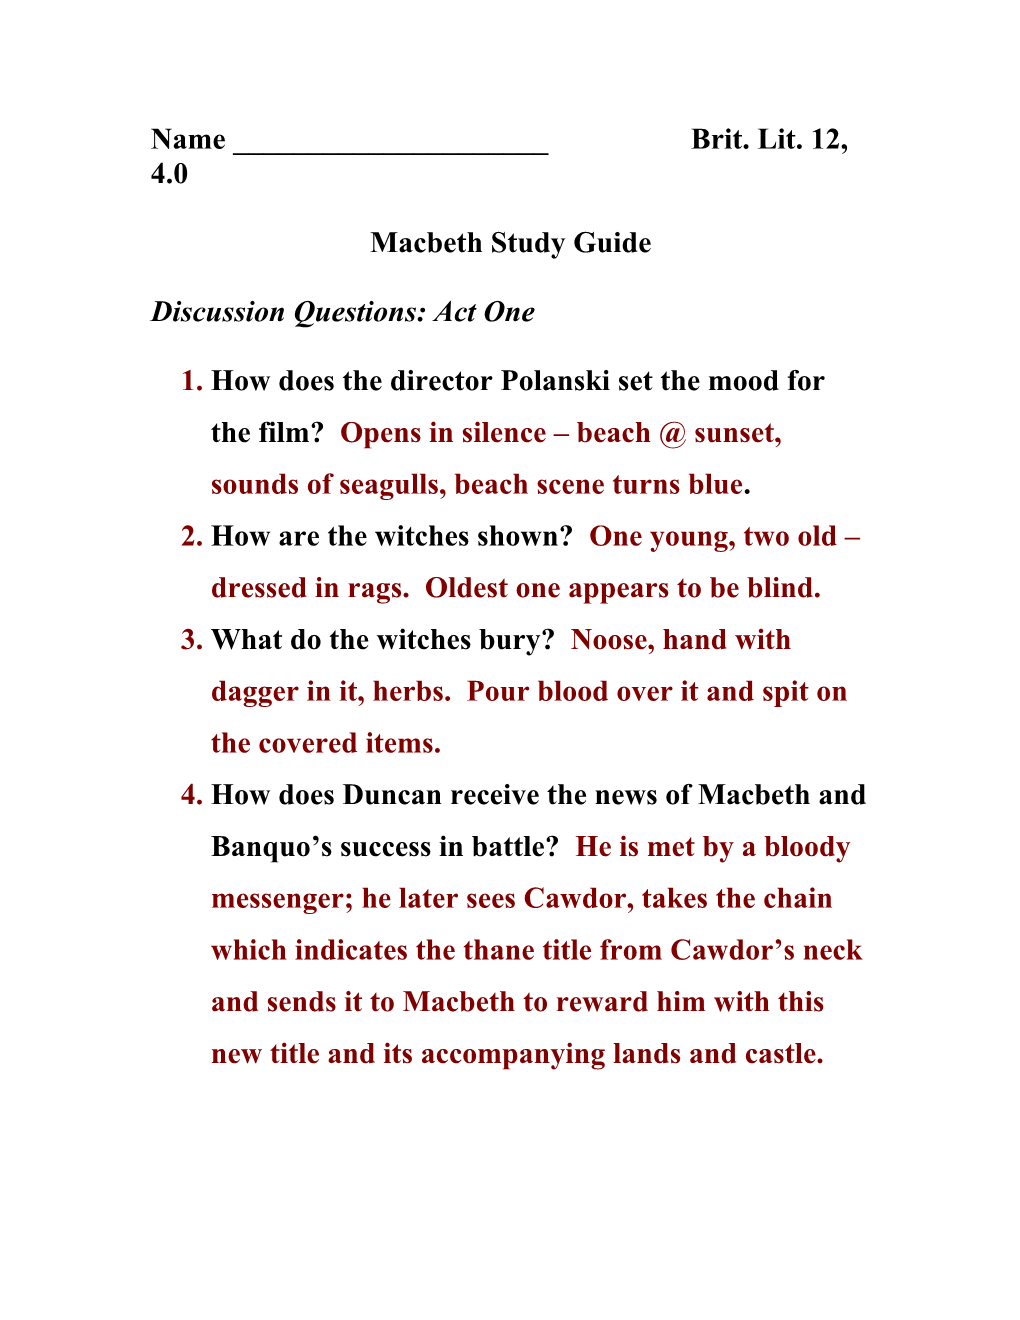 Macbeth Study Guide